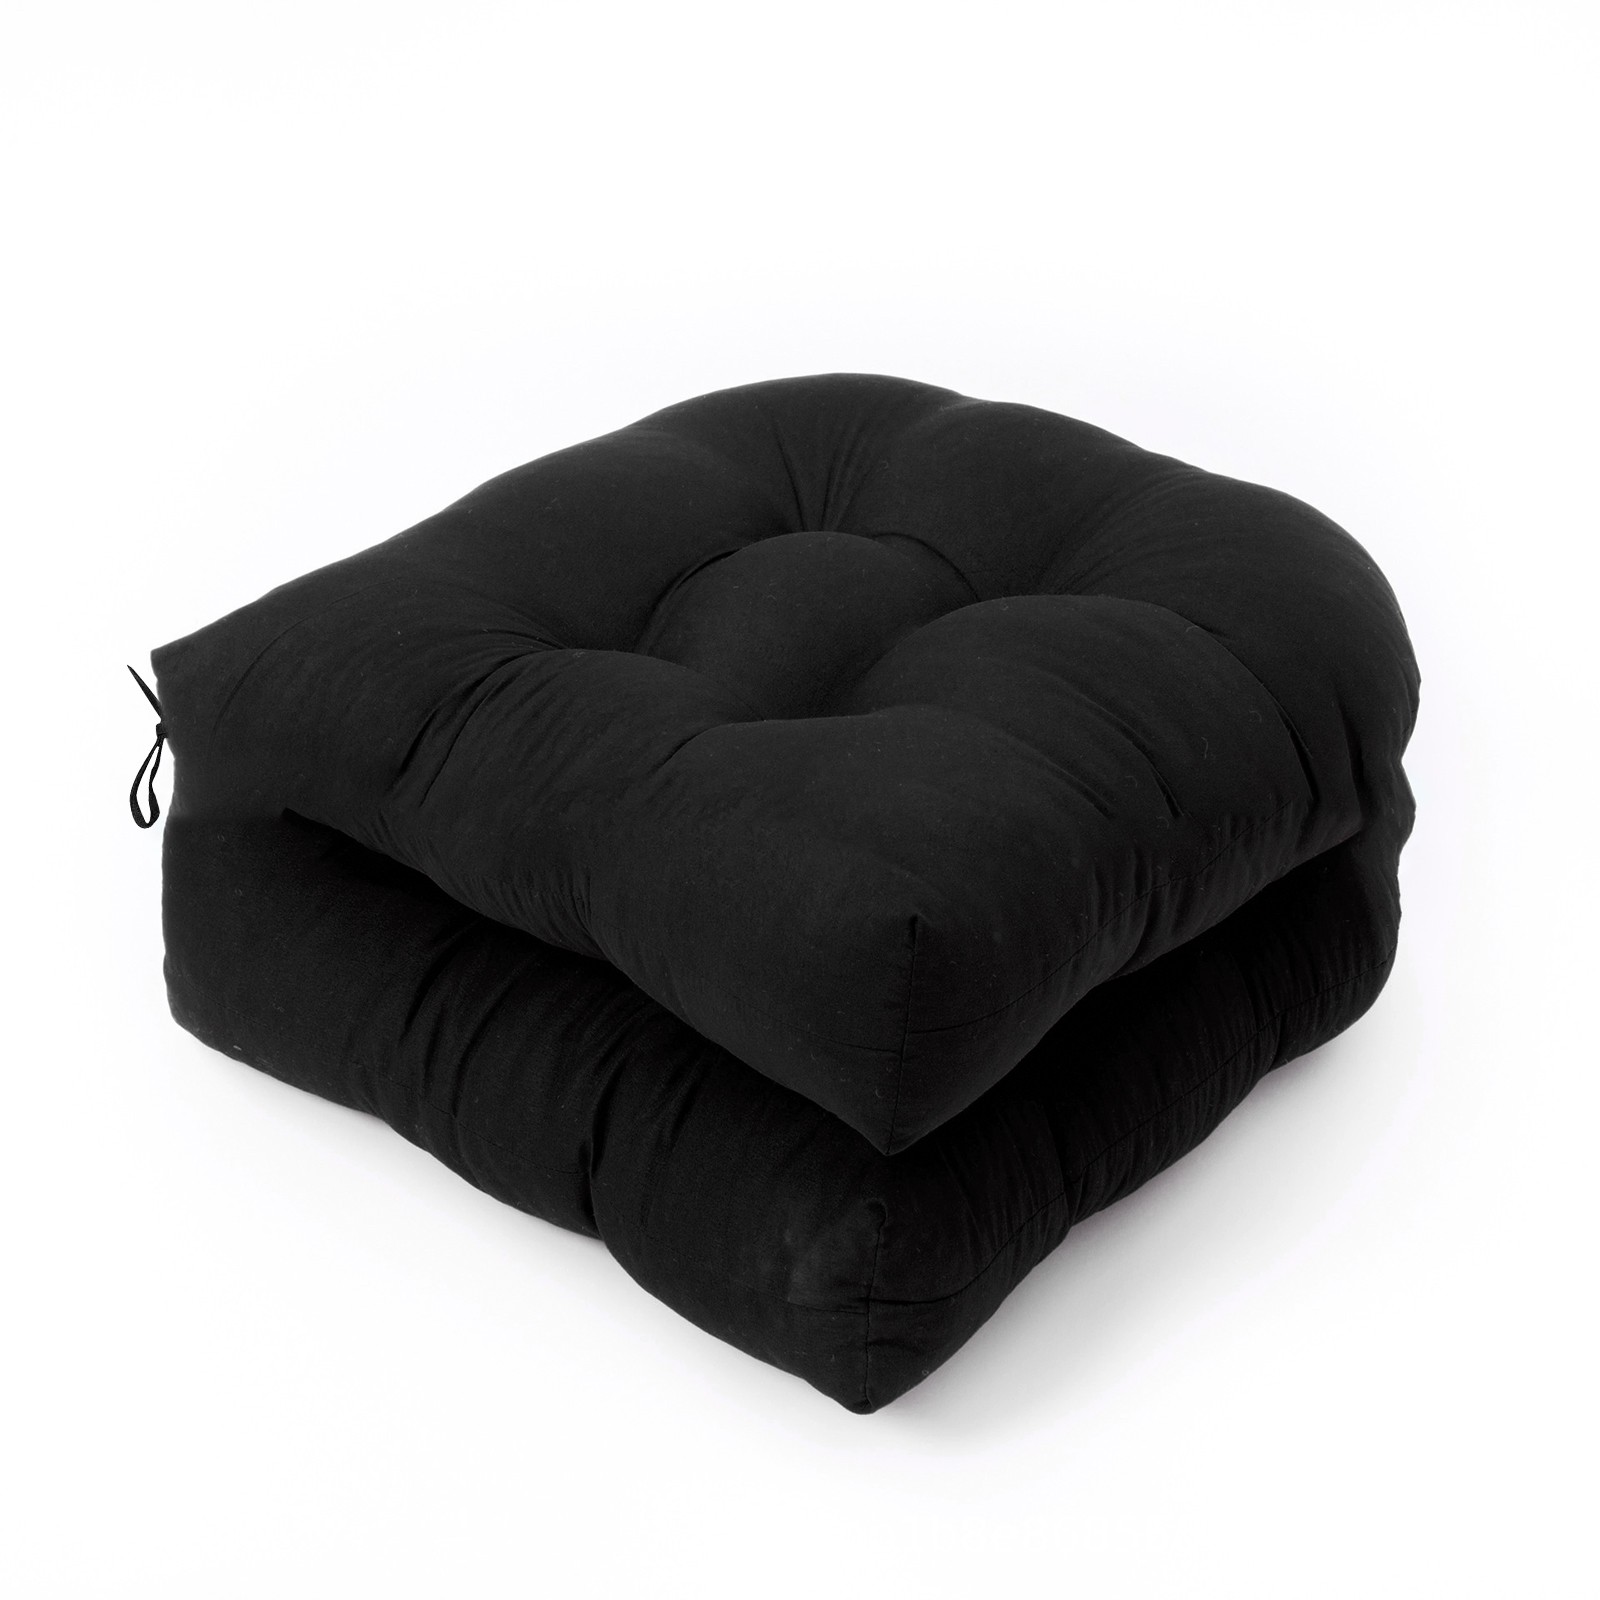 Mduoduo U-shaped Cushion Sofa Cushion Rattan Chair Black Cushion Terrace Cushion for Outdoor Indoor 2 Pcs - image 1 of 14